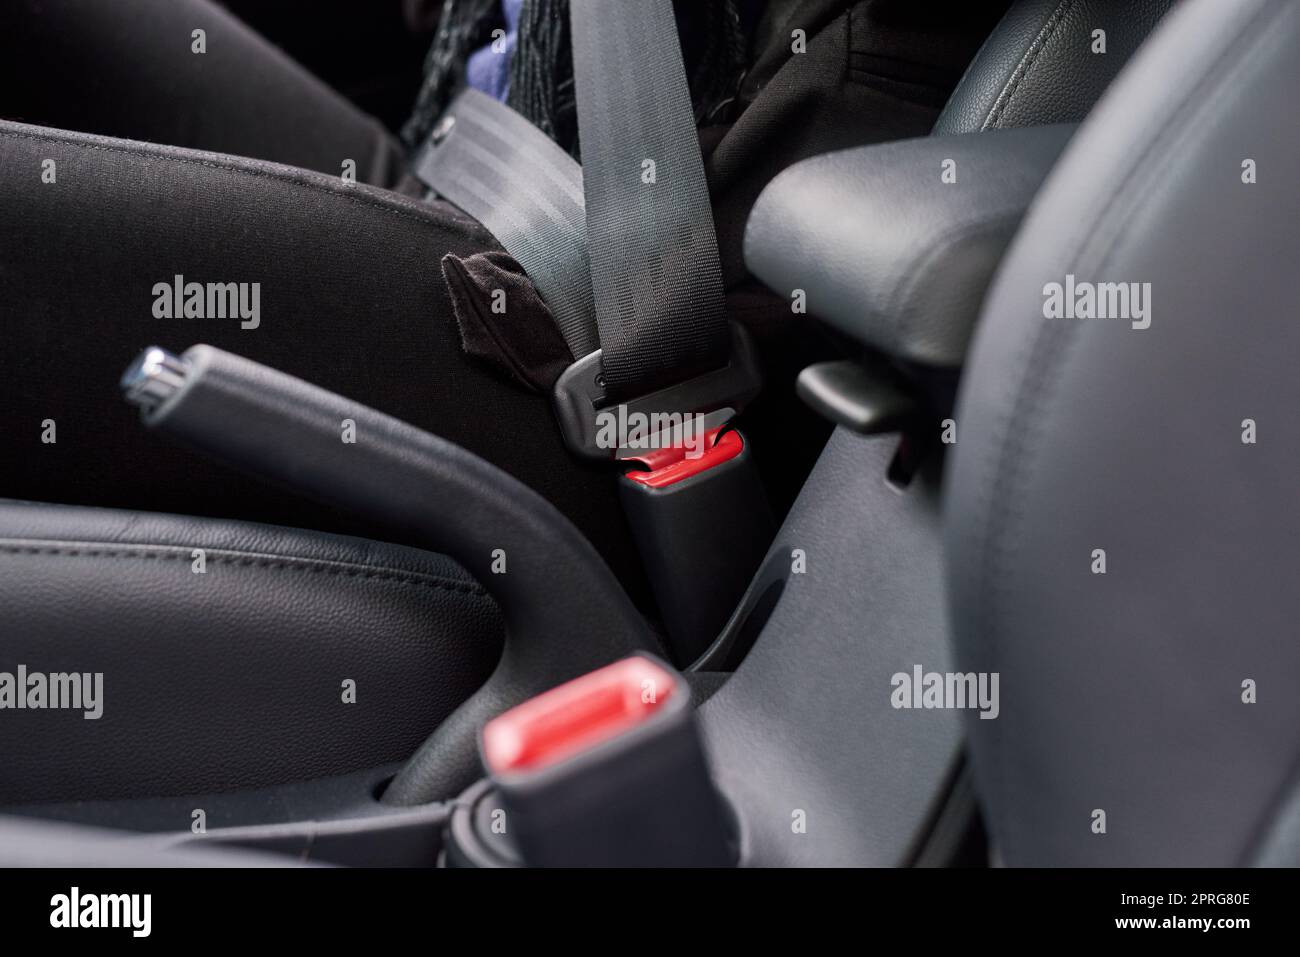 Safety first. Closeup shot of a seatbelt inside a motor vehicle. Stock Photo